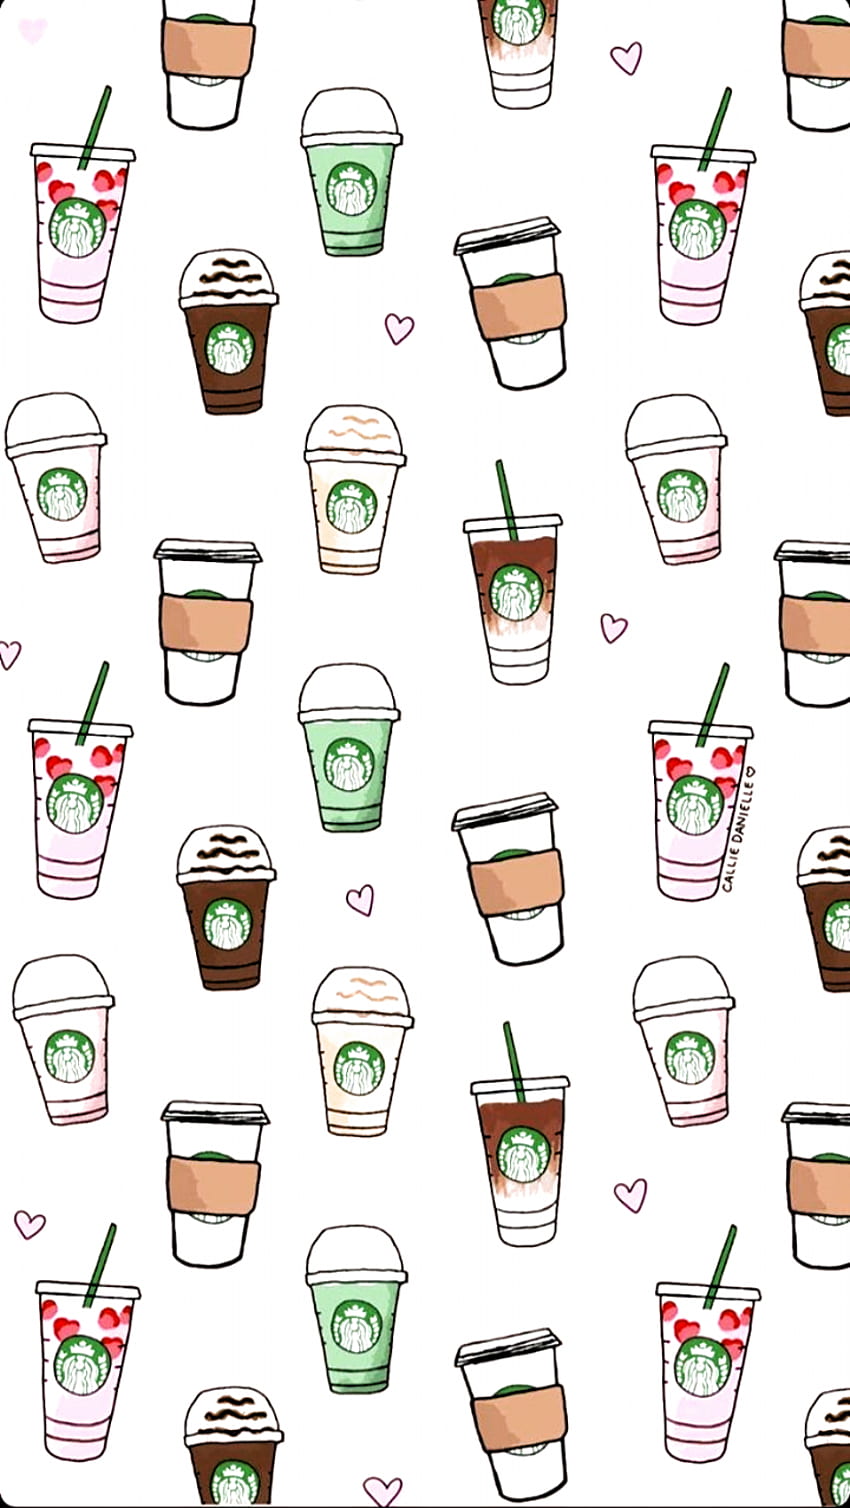 How to Make an Interesting Art Piece Using Tree Branches  eHow  Starbucks  wallpaper Starbucks art Sweet drawings